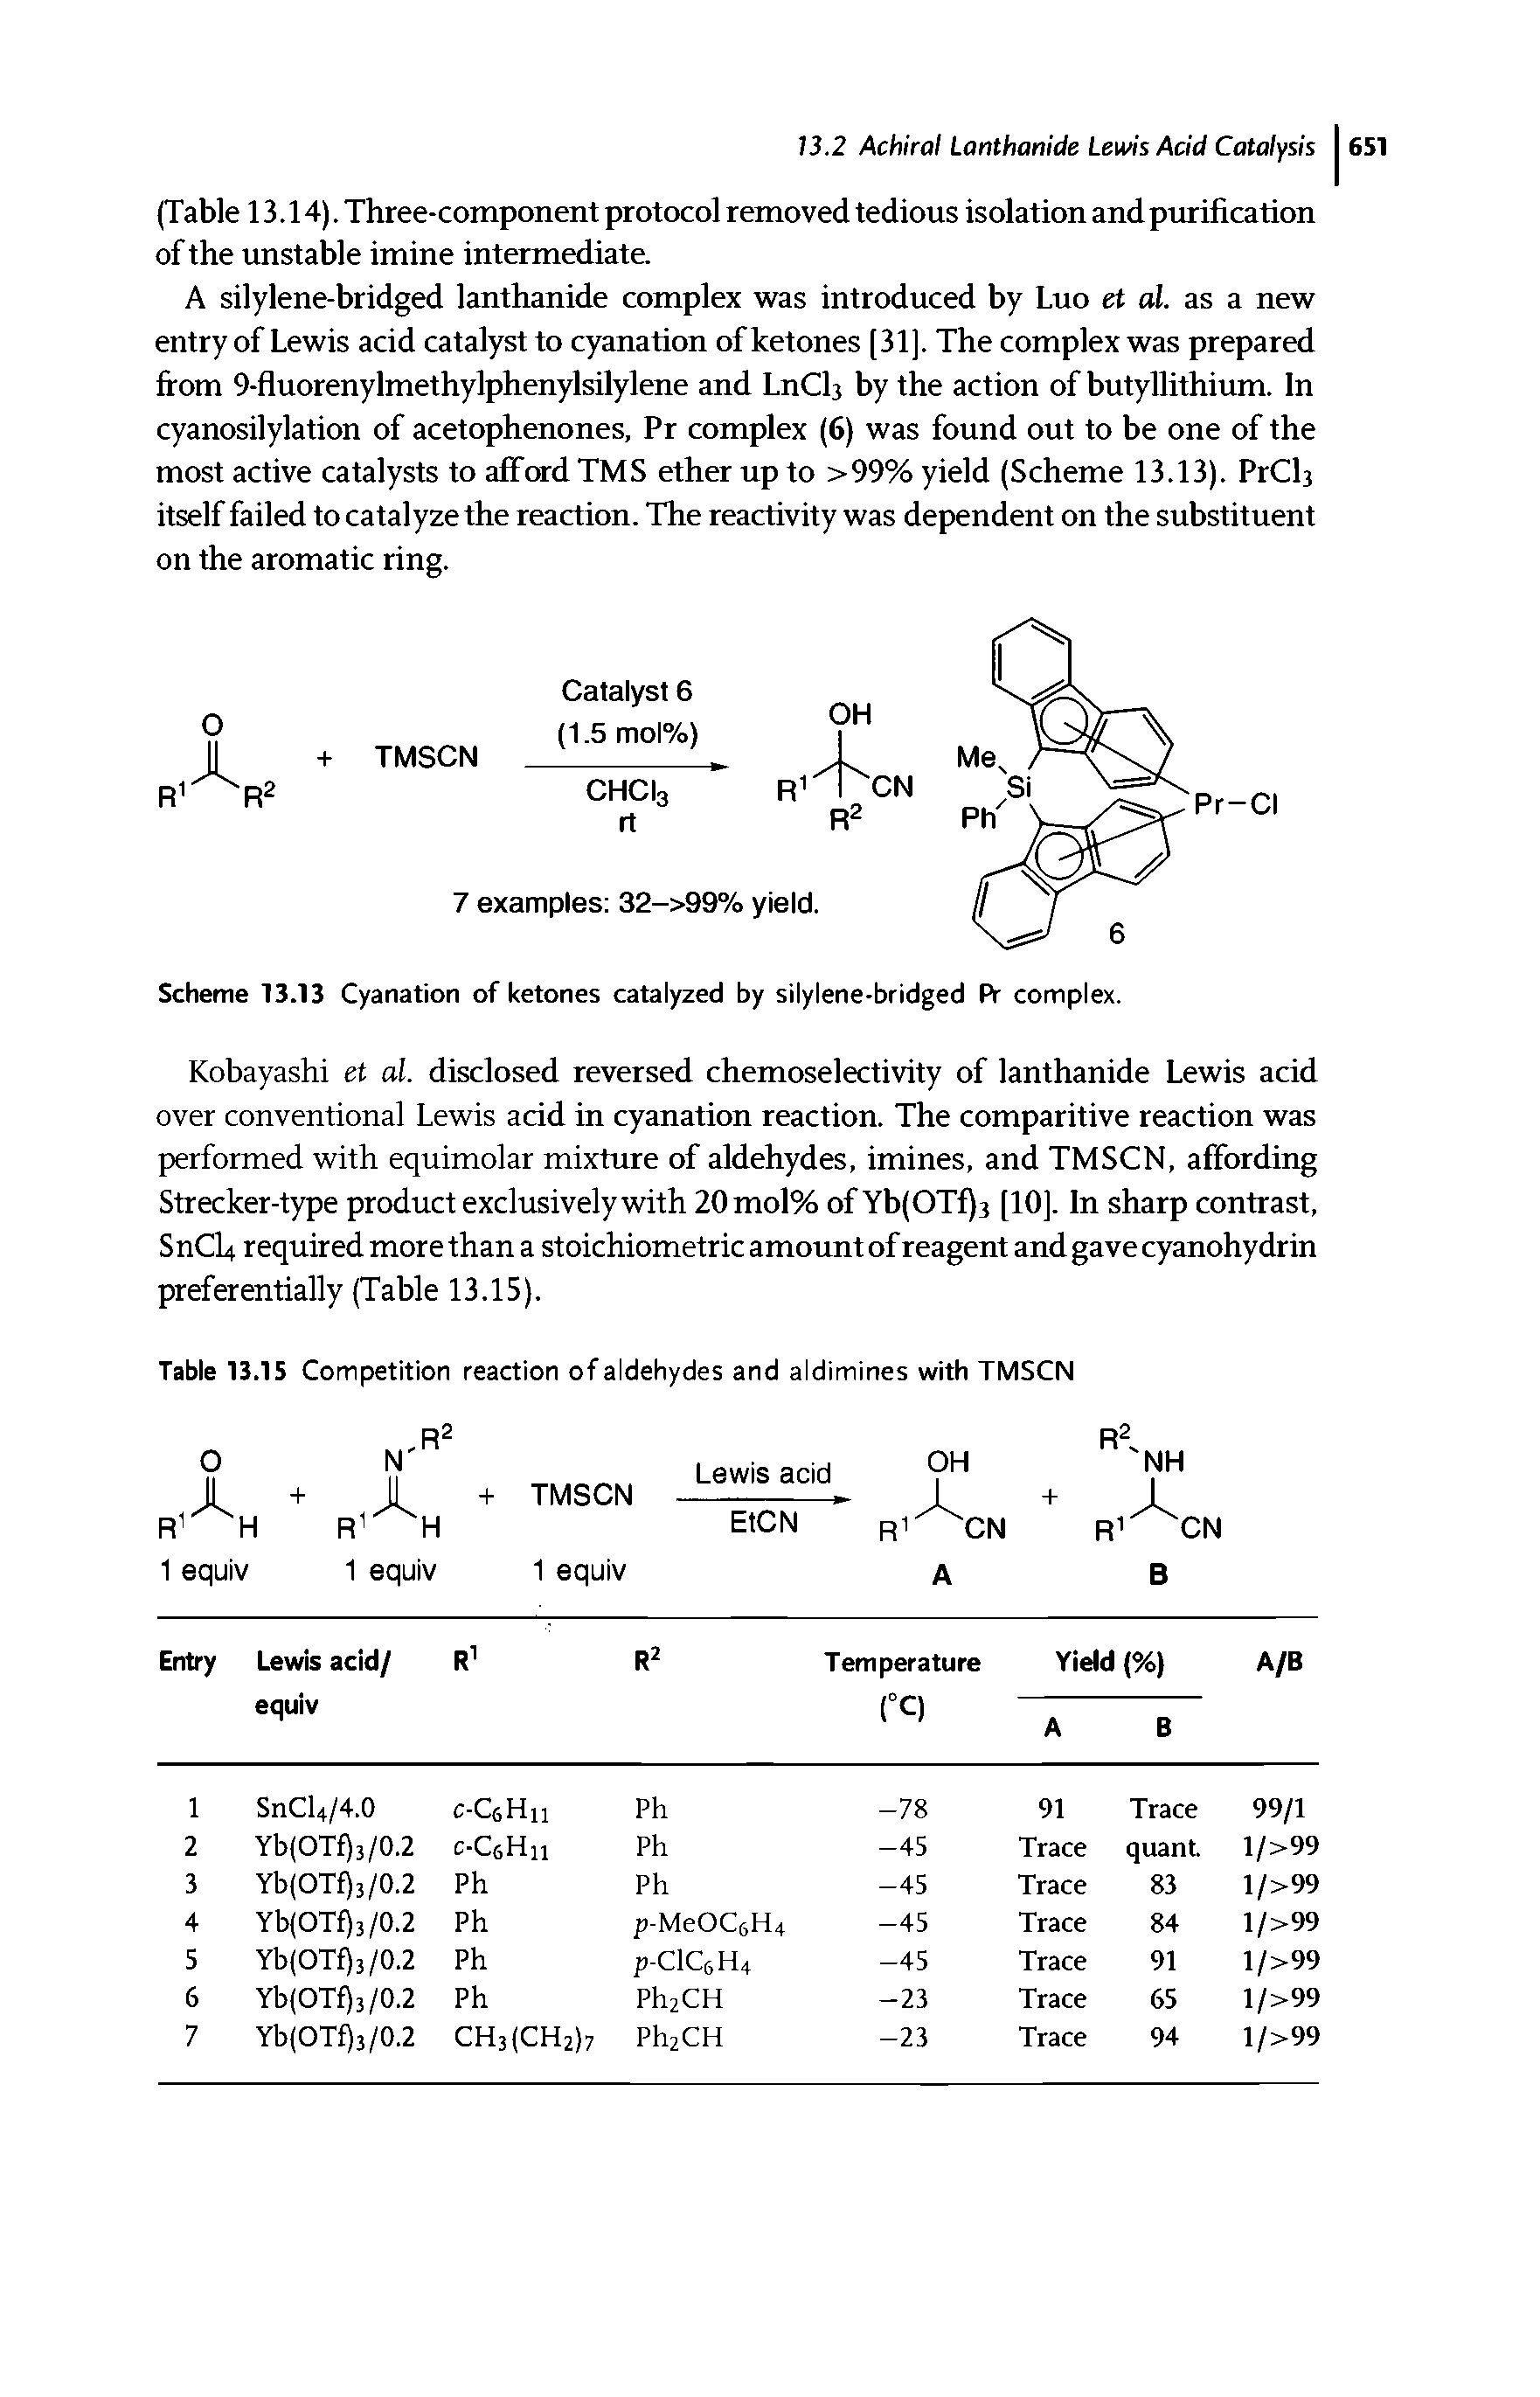 Scheme 13.13 Cyanation of ketones catalyzed by silylene-bridged Pr complex.